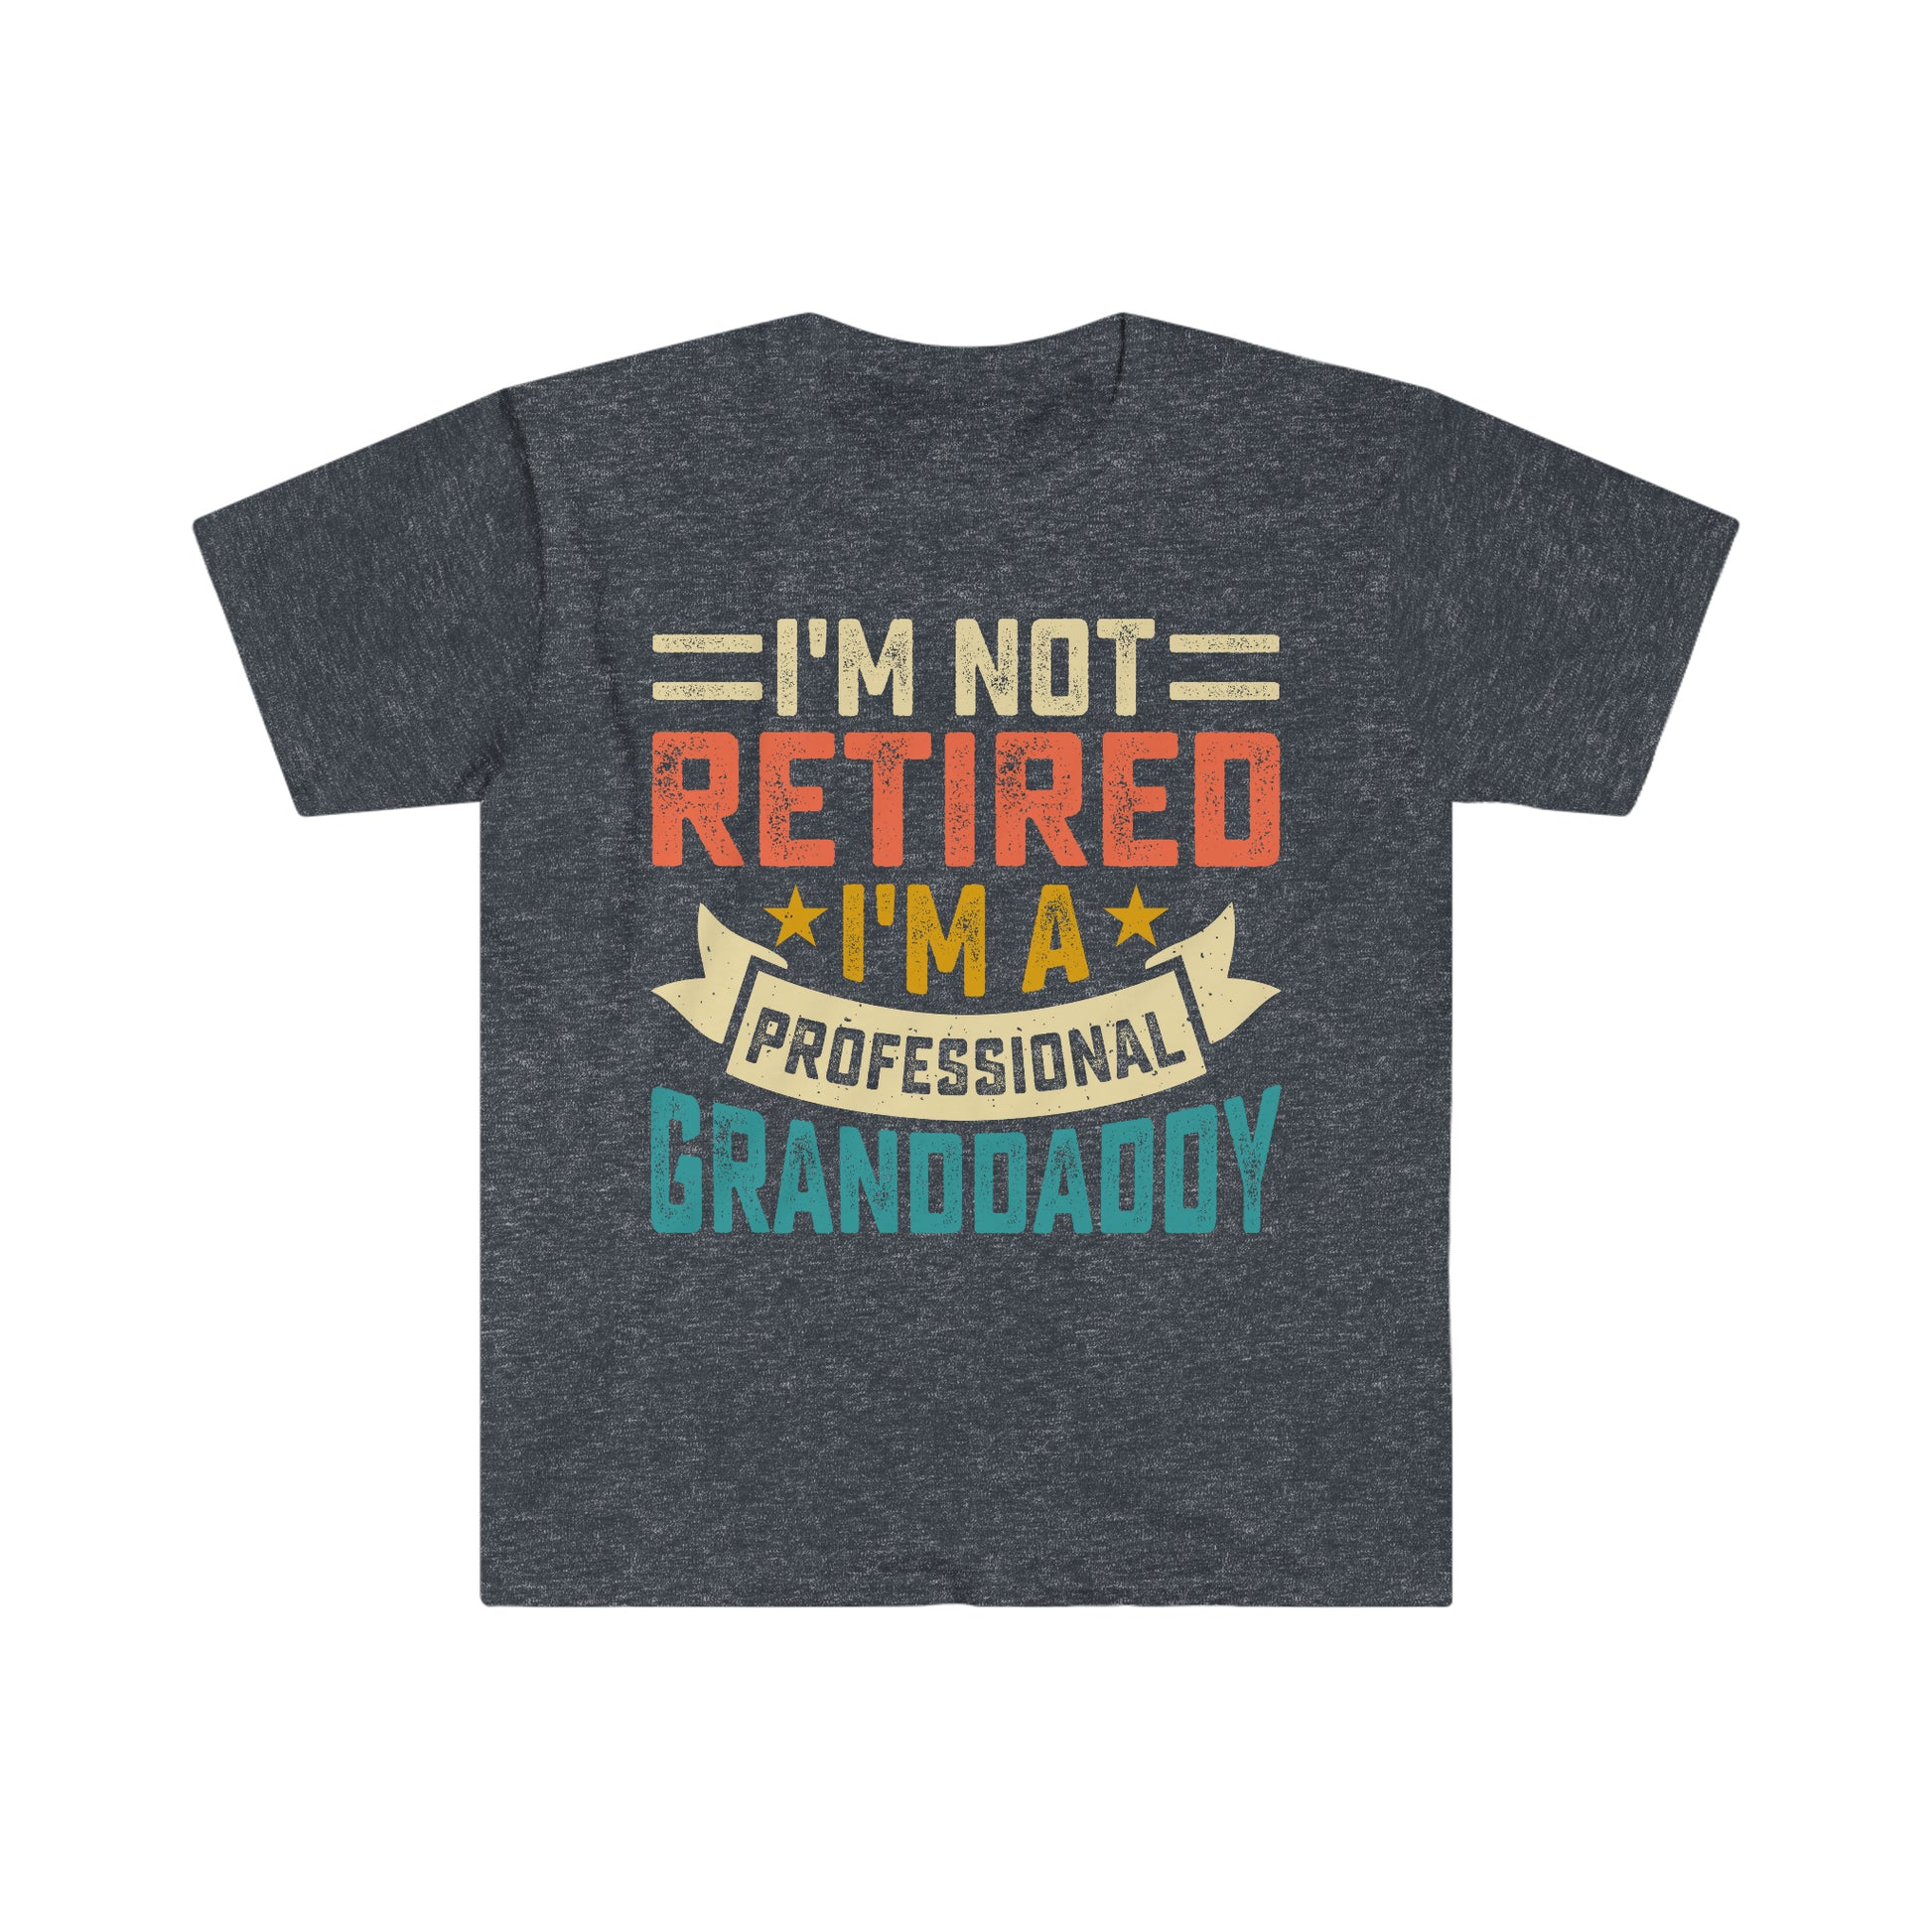 Funny Retirement Shirt for Grandpa